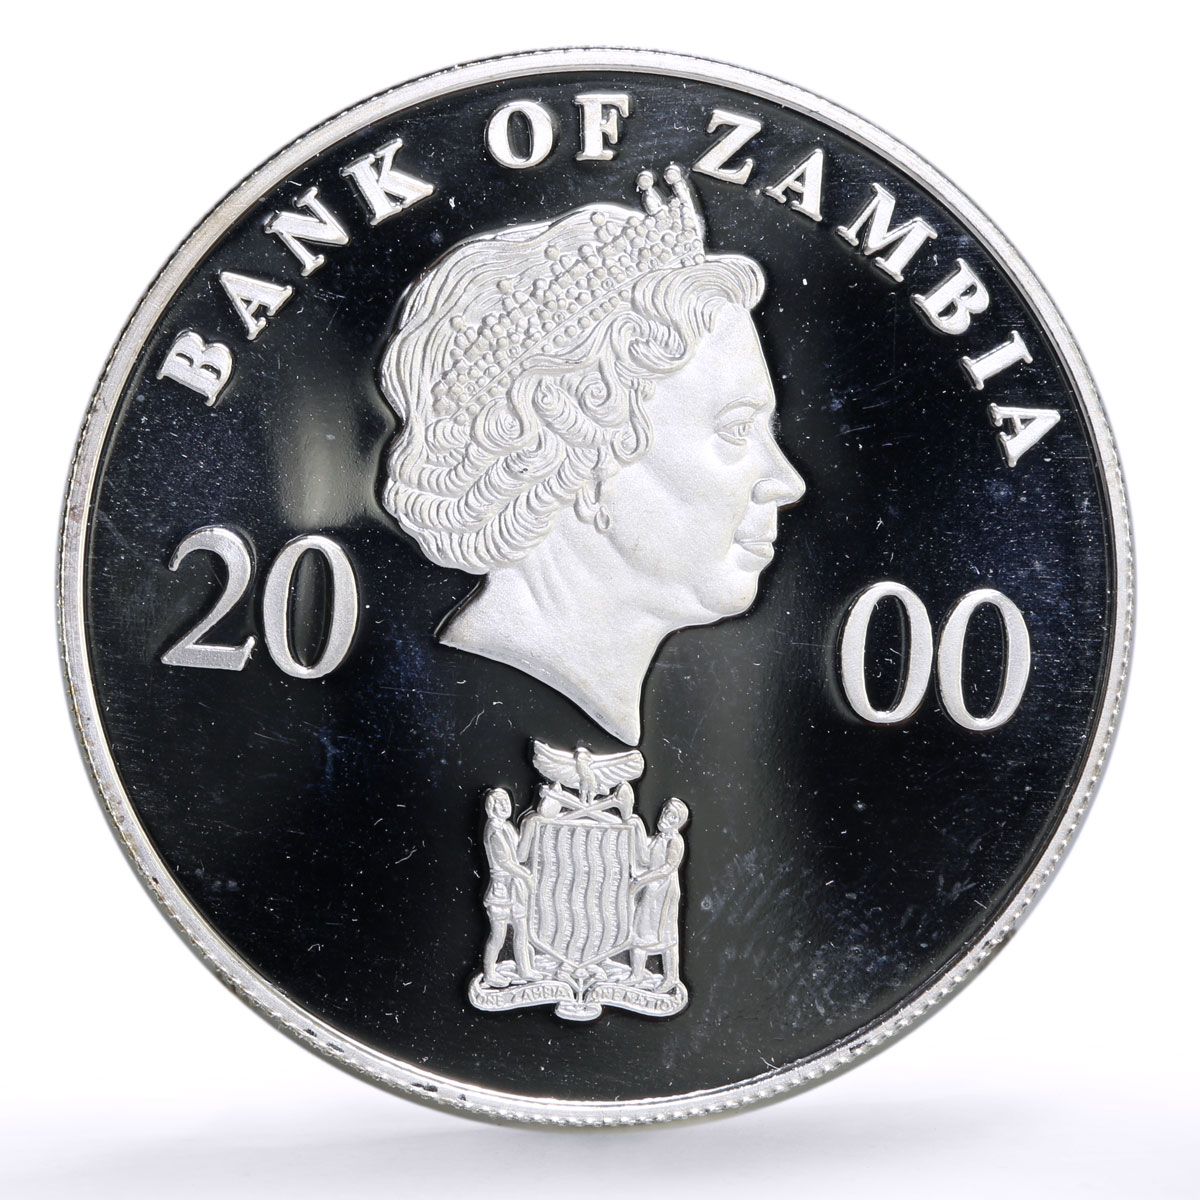 Zambia 1000 kwacha Conservation Wildlife Okapi Johnson Fauna silver coin 2000